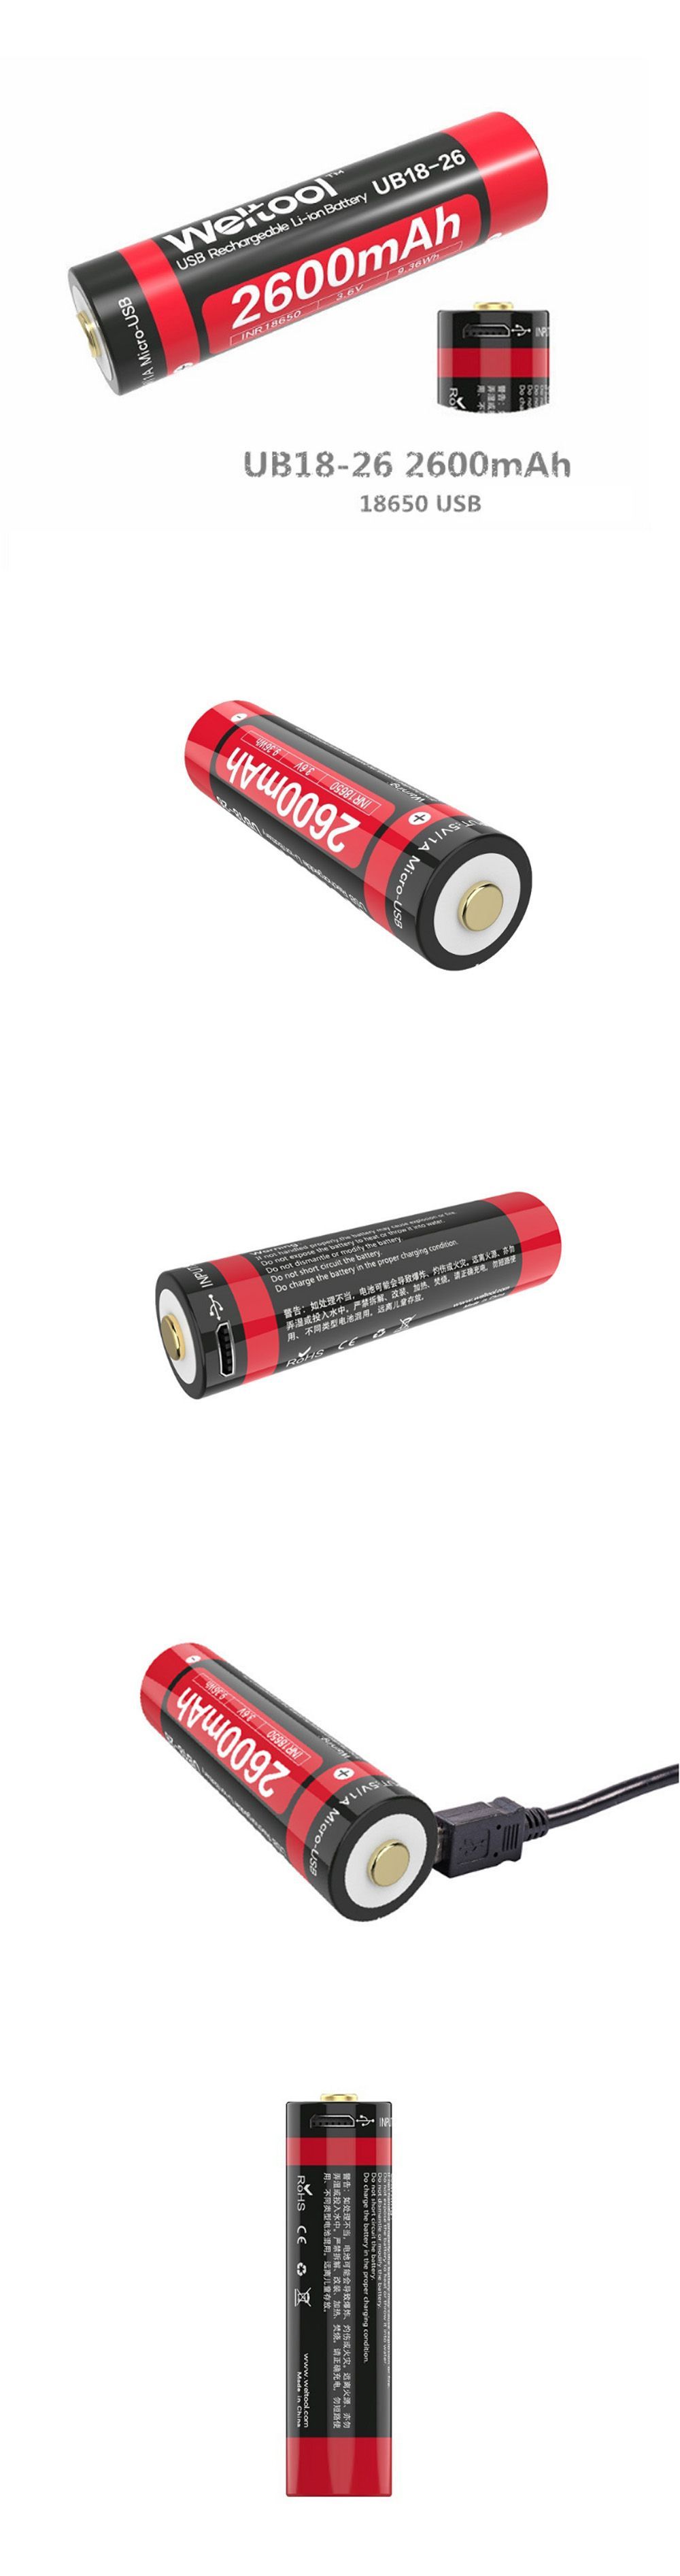 Weltool-UB18-26-2600mAh-USB-Rechargeable-18650-Battery-For-LED-Flashlight-1663675